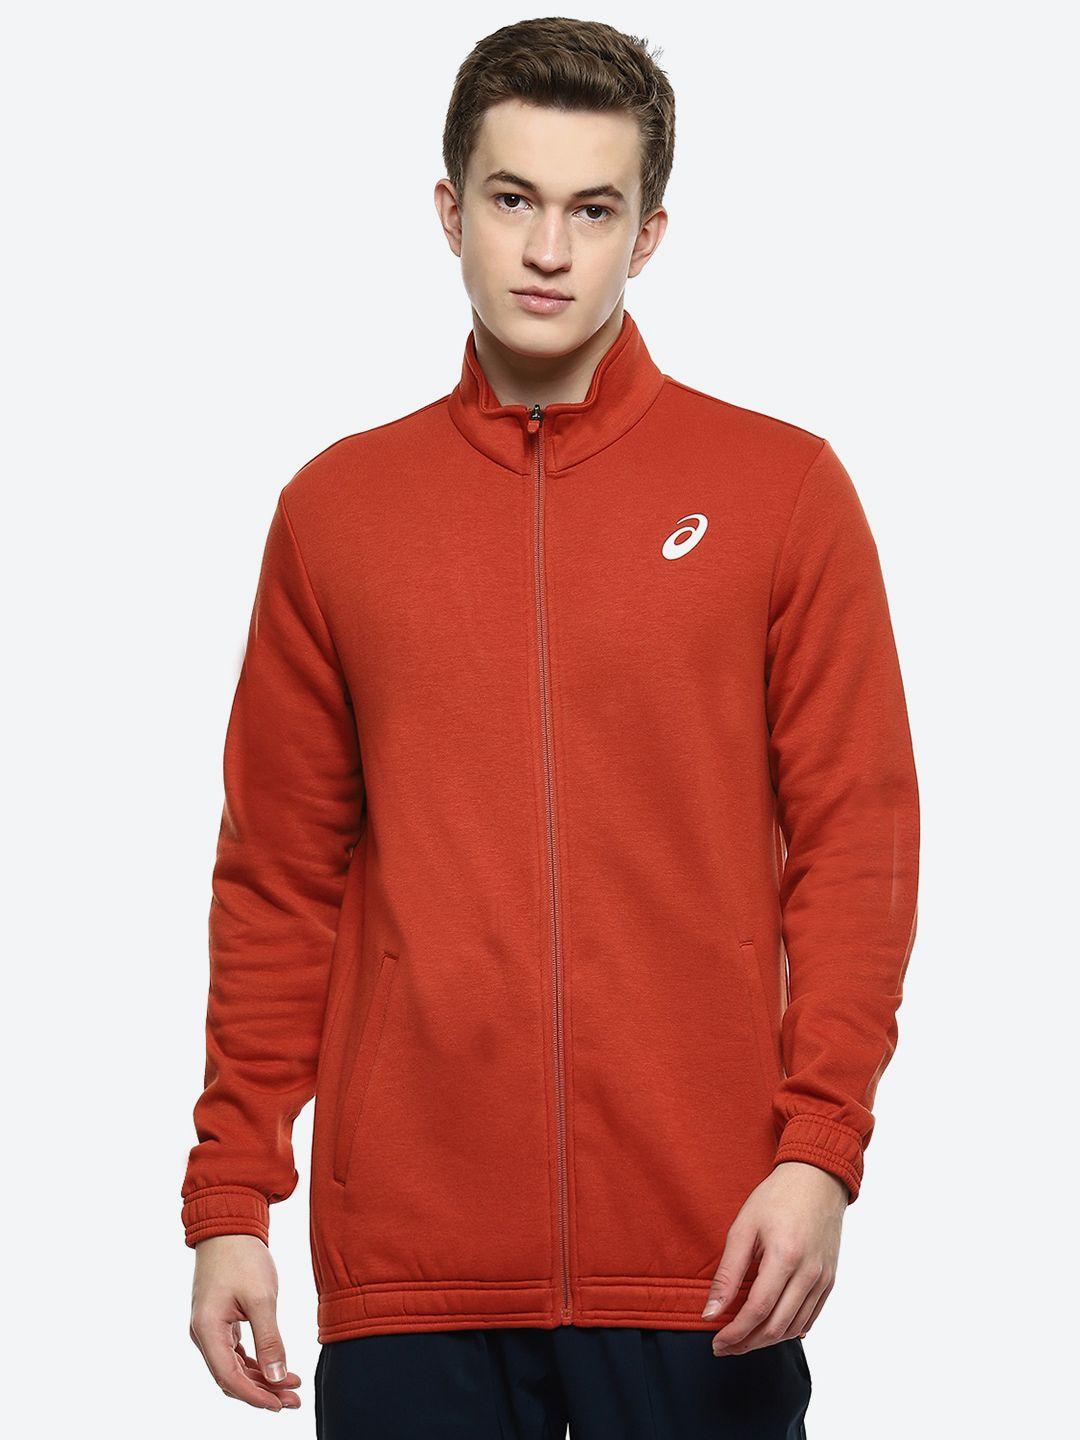 asics-fleece-full-zip-mock-collar-brand-logo-printed-sporty-jackets